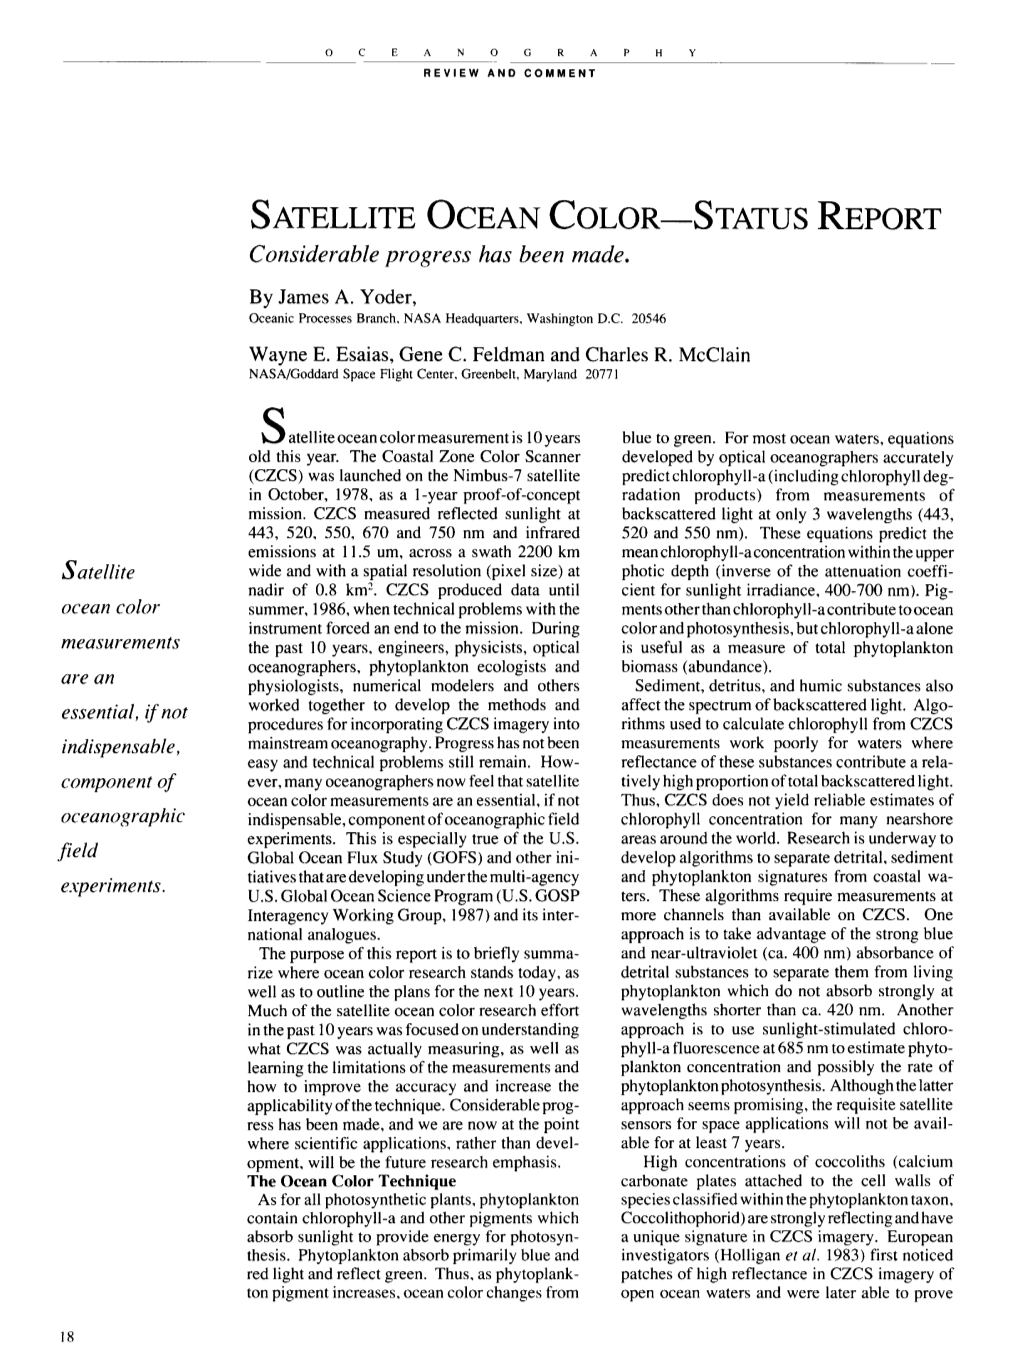 SATELLITE OCEAN COLOR--STATUS REPORT Considerable Progress Has Been Made